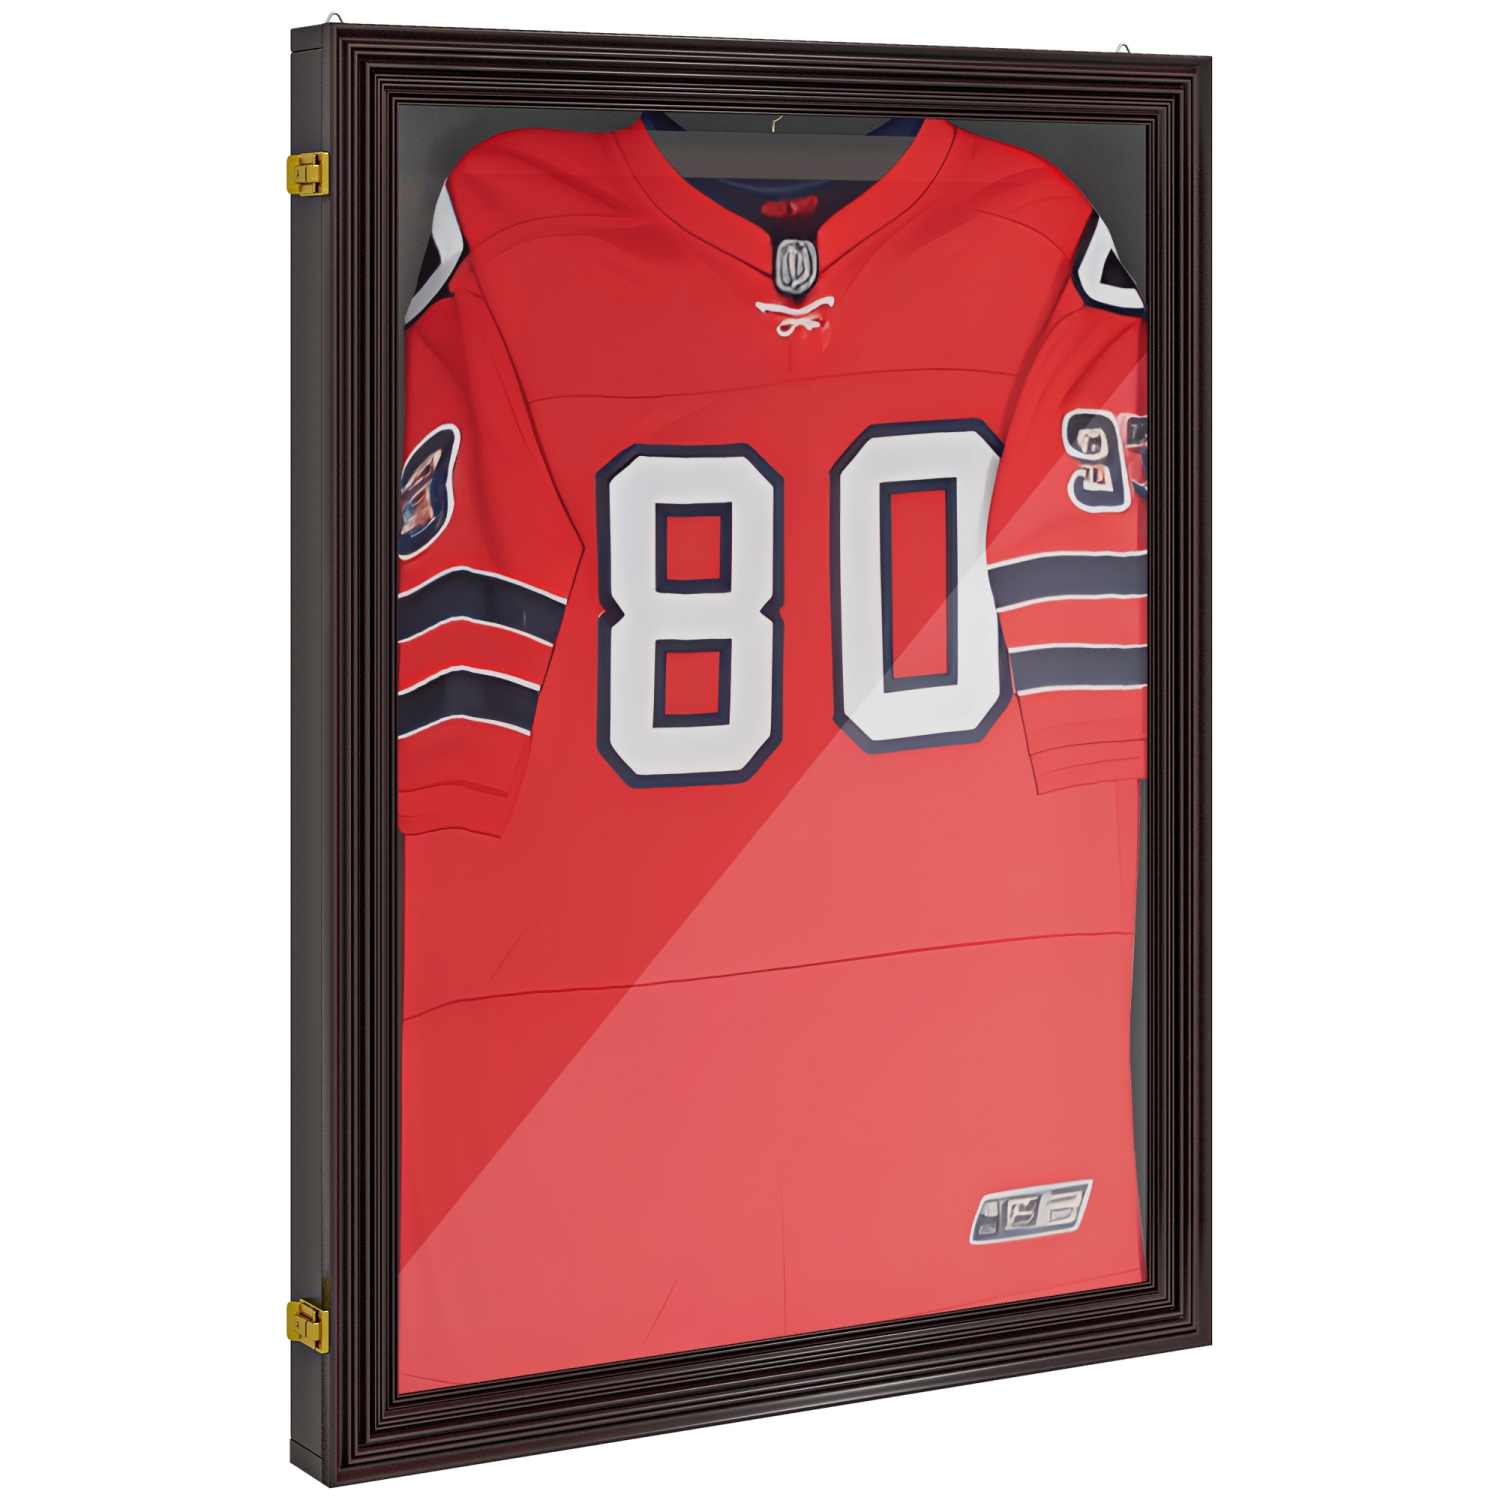 HOMCOM Jersey Display Frame Case, Acrylic Sports Shirt Shadow Box for Basketball Football Baseball (Brown, 23.5" W x 31.5" H)